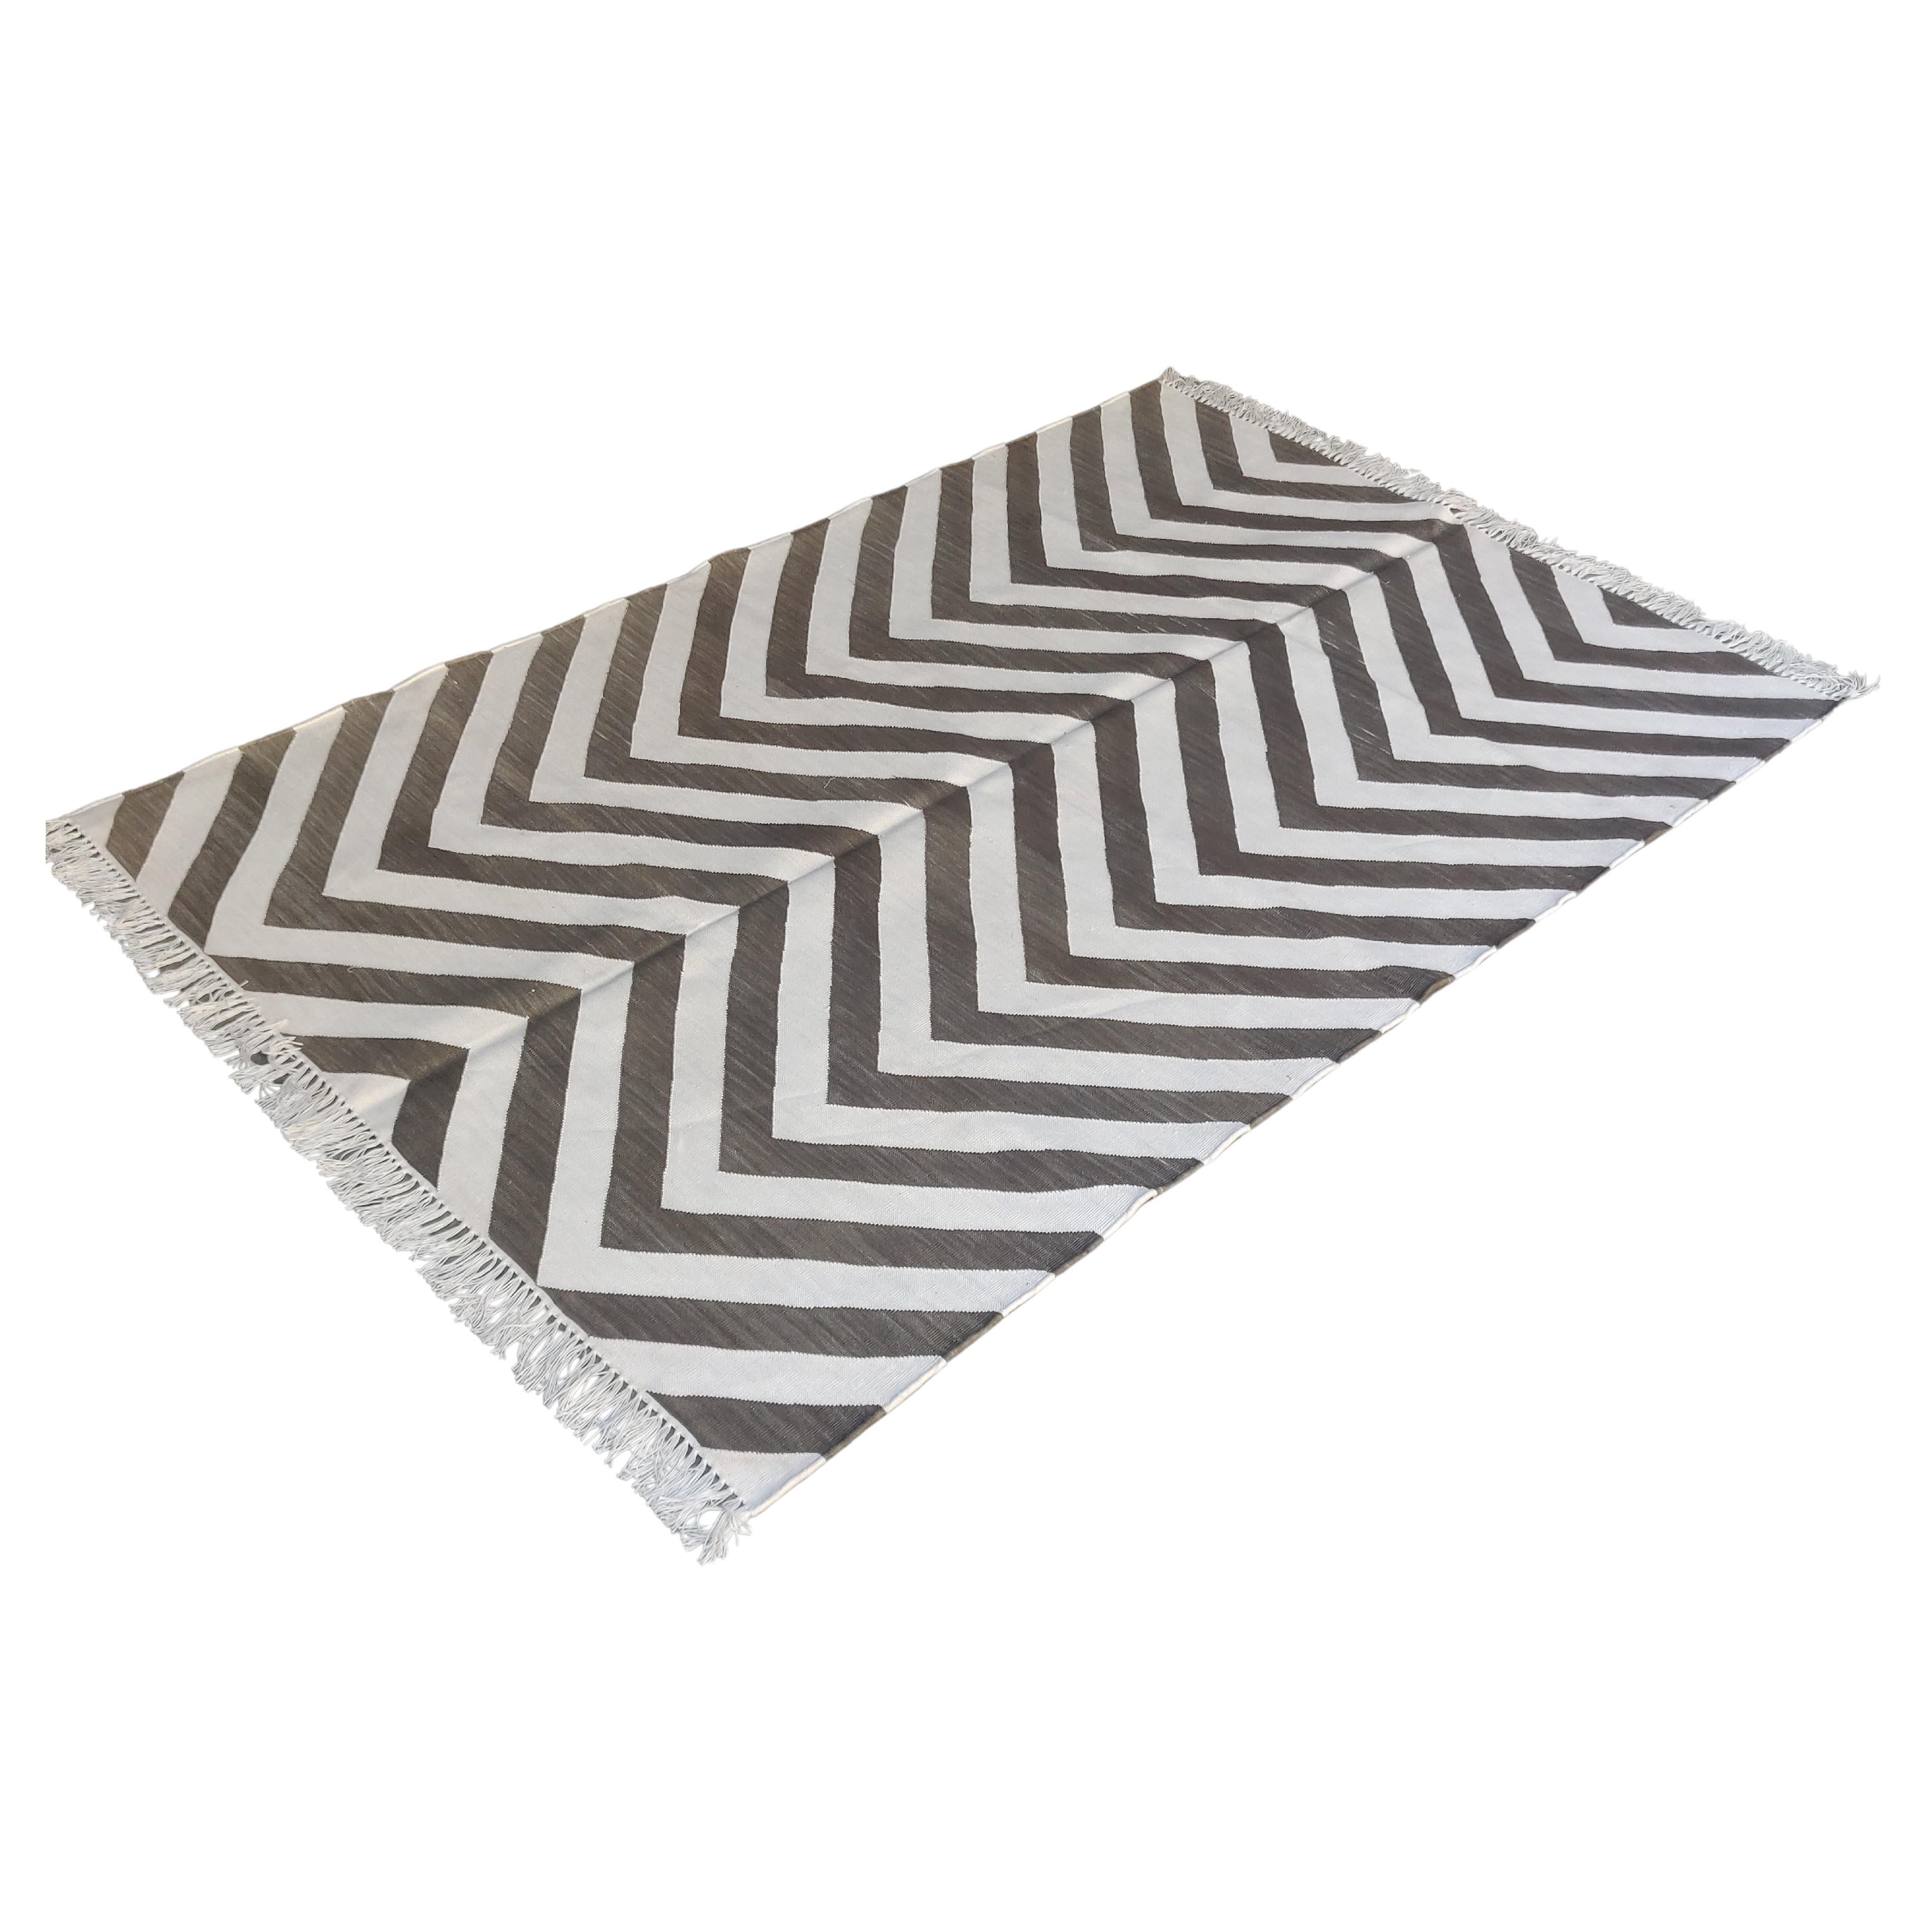 Handgefertigter Flachgewebe-Teppich aus Baumwolle, 4x6 Brown and White Striped Indian Dhurrie